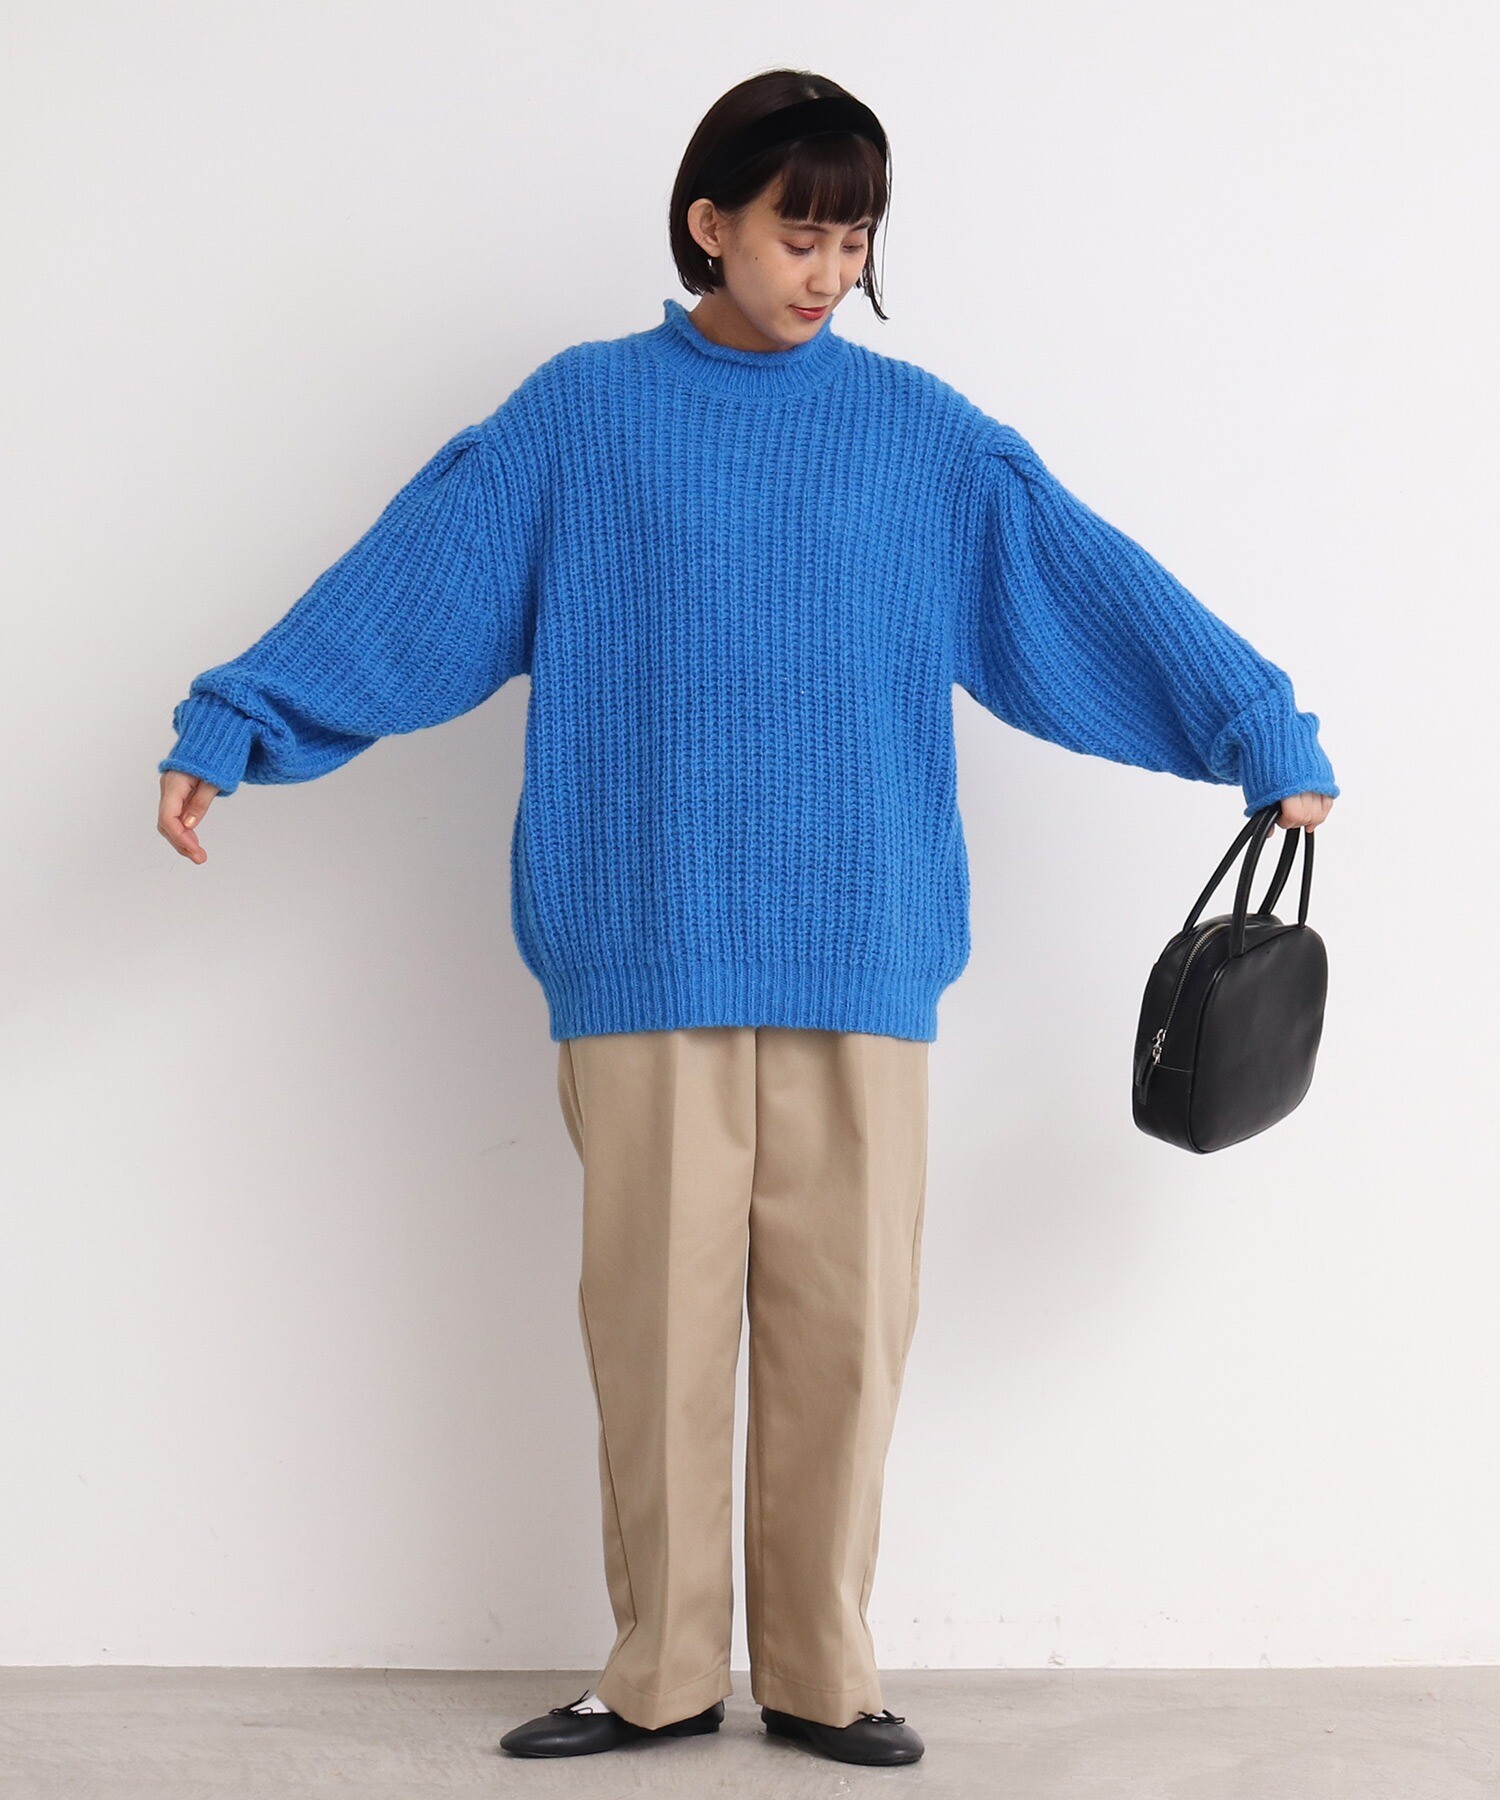 WOMENs S  パタゴニア メリノ セーター ドレス Merino Sweater Dress 生産終了モデル 入手困難 PATAGONIA 58720 HMB Harvest Moon Blue ブルー系